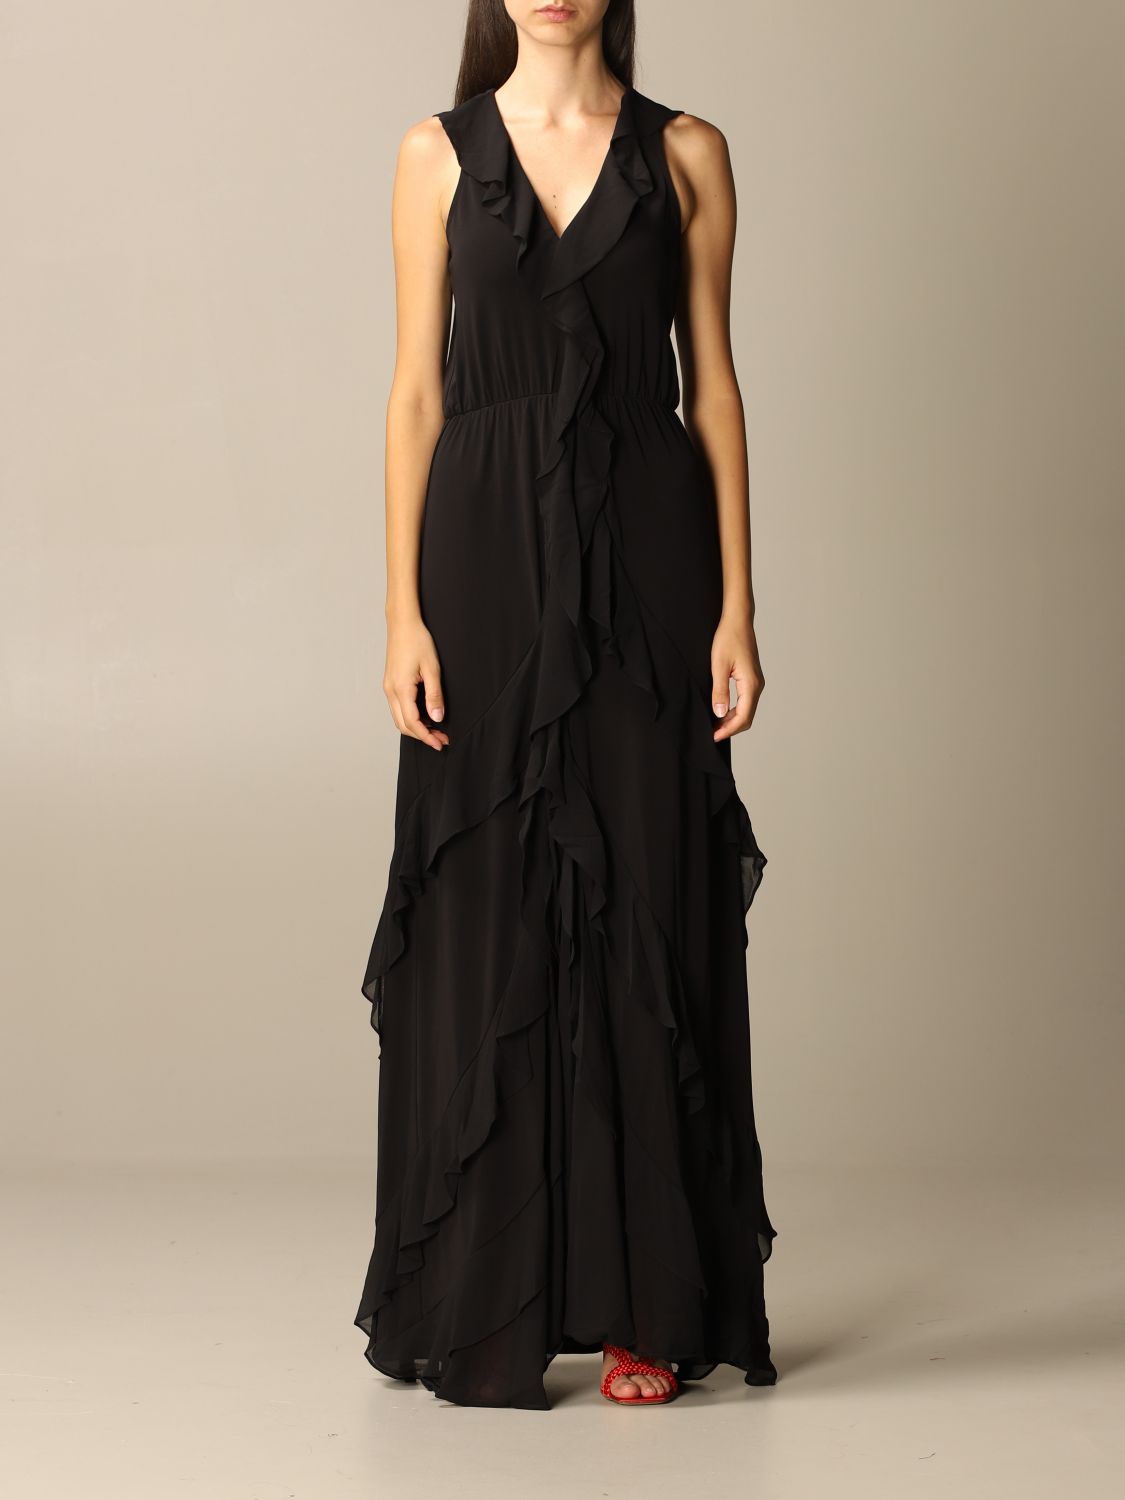 Buy > michael kors black ruffle dress > in stock